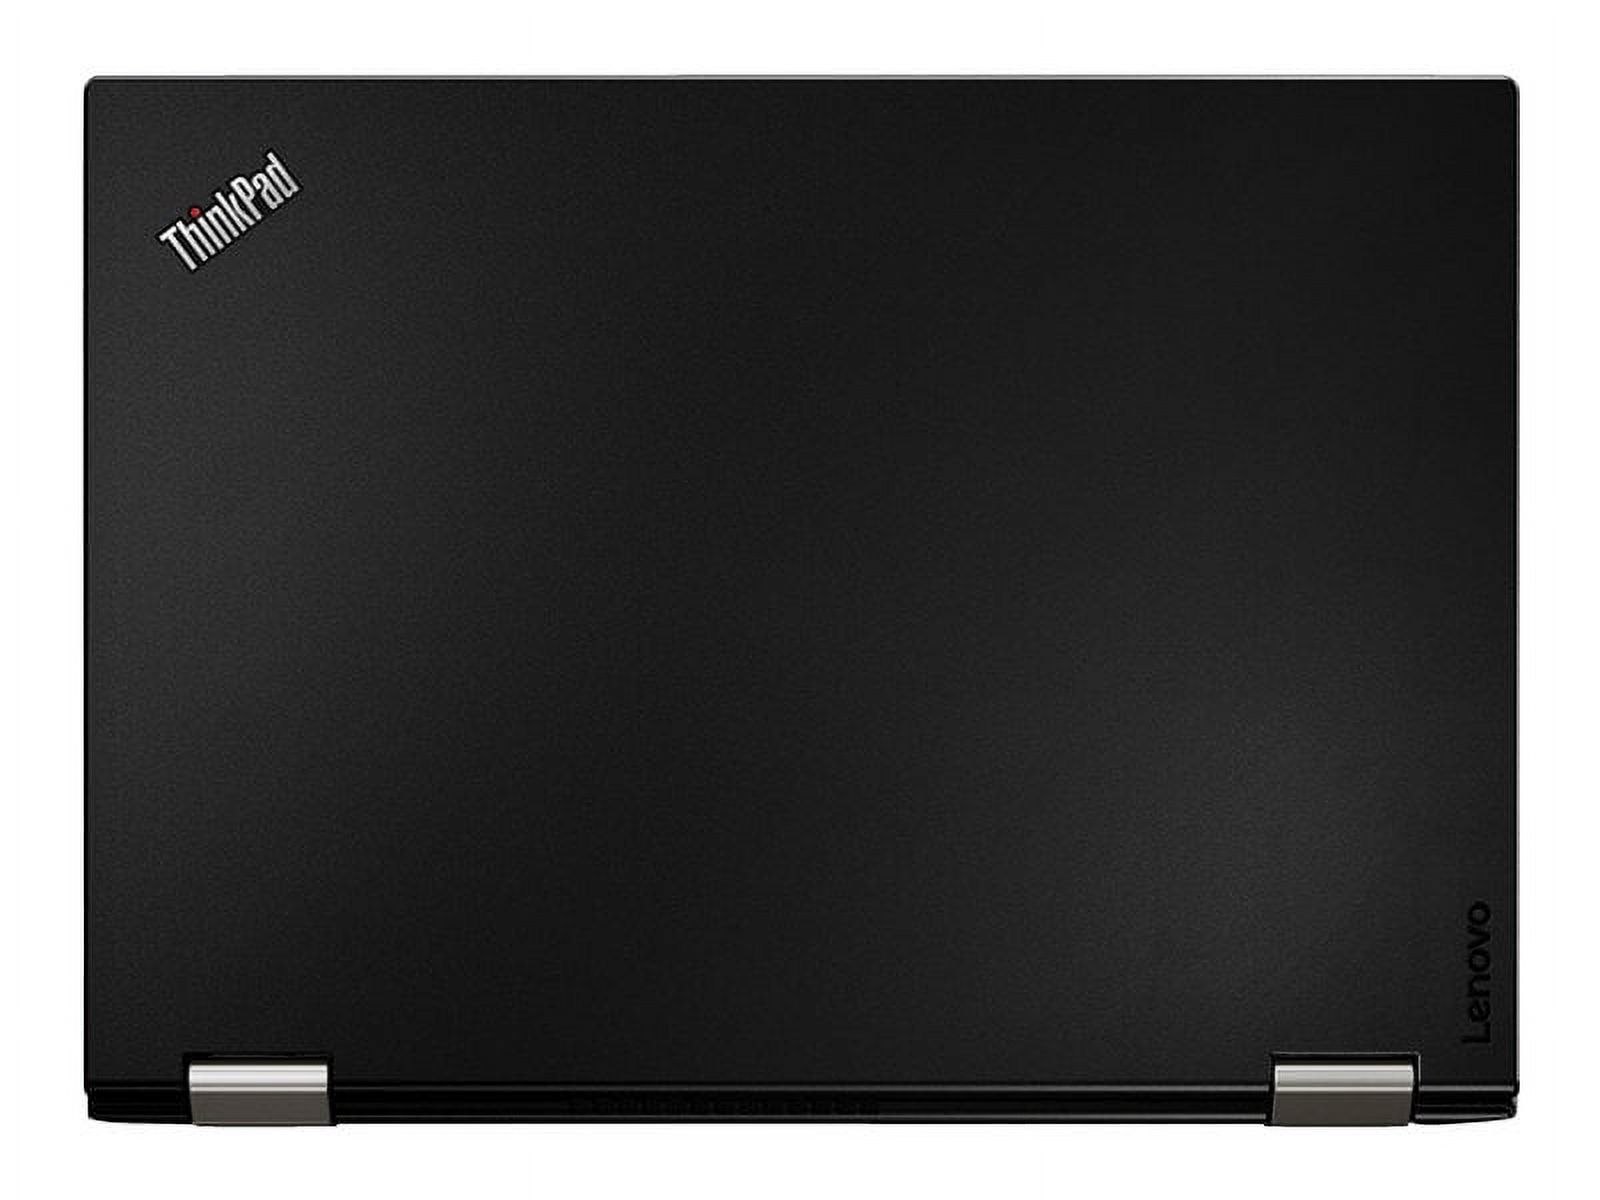 Lenovo ThinkPad Yoga 260 20FD - Ultrabook - Intel Core i5 - 6200U / up to 2.8 GHz - Win 10 Pro 64-bit - HD Graphics 520 - 8 GB RAM - 256 GB SSD TCG Opal Encryption 2 - 12.5" IPS touchscreen 1920 x 1080 (Full HD) - Wi-Fi 5 - midnight black - kbd: US - image 5 of 9